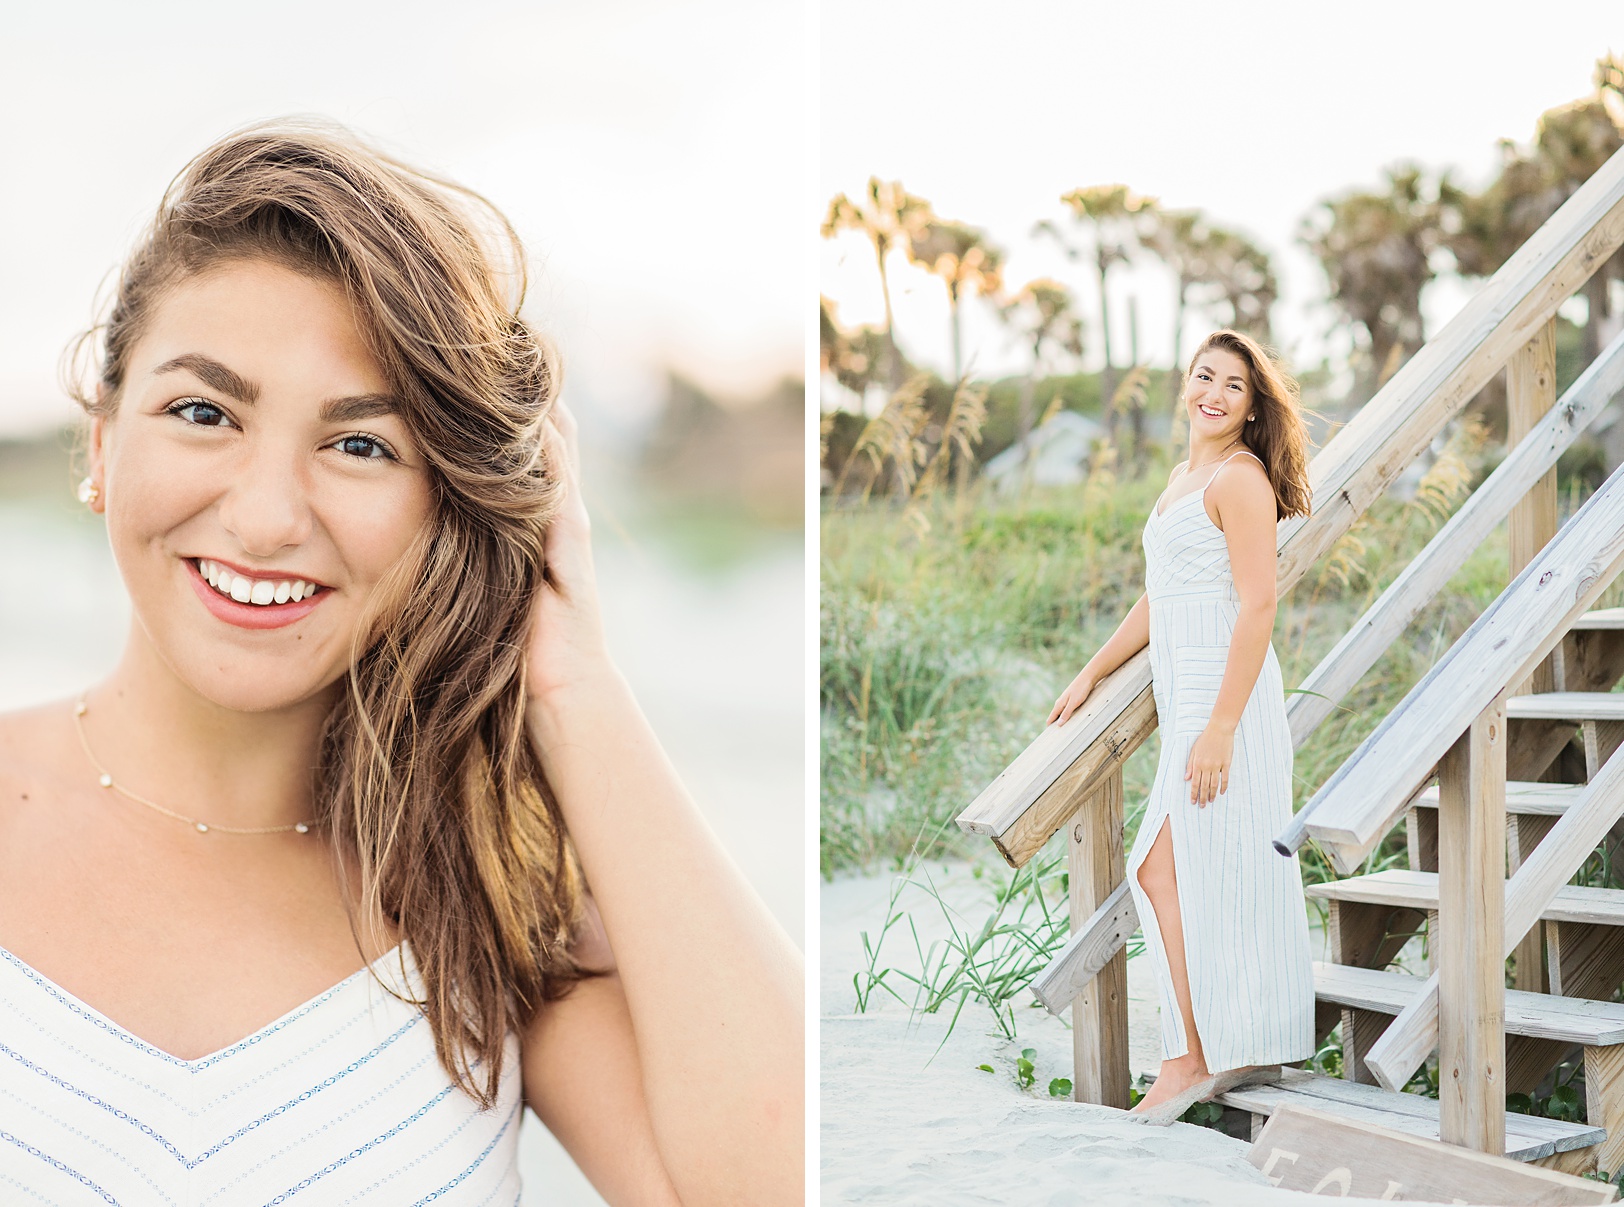 Charleston Beach Photoshoot in white dress at sunset | Kaitlin Scott Photography